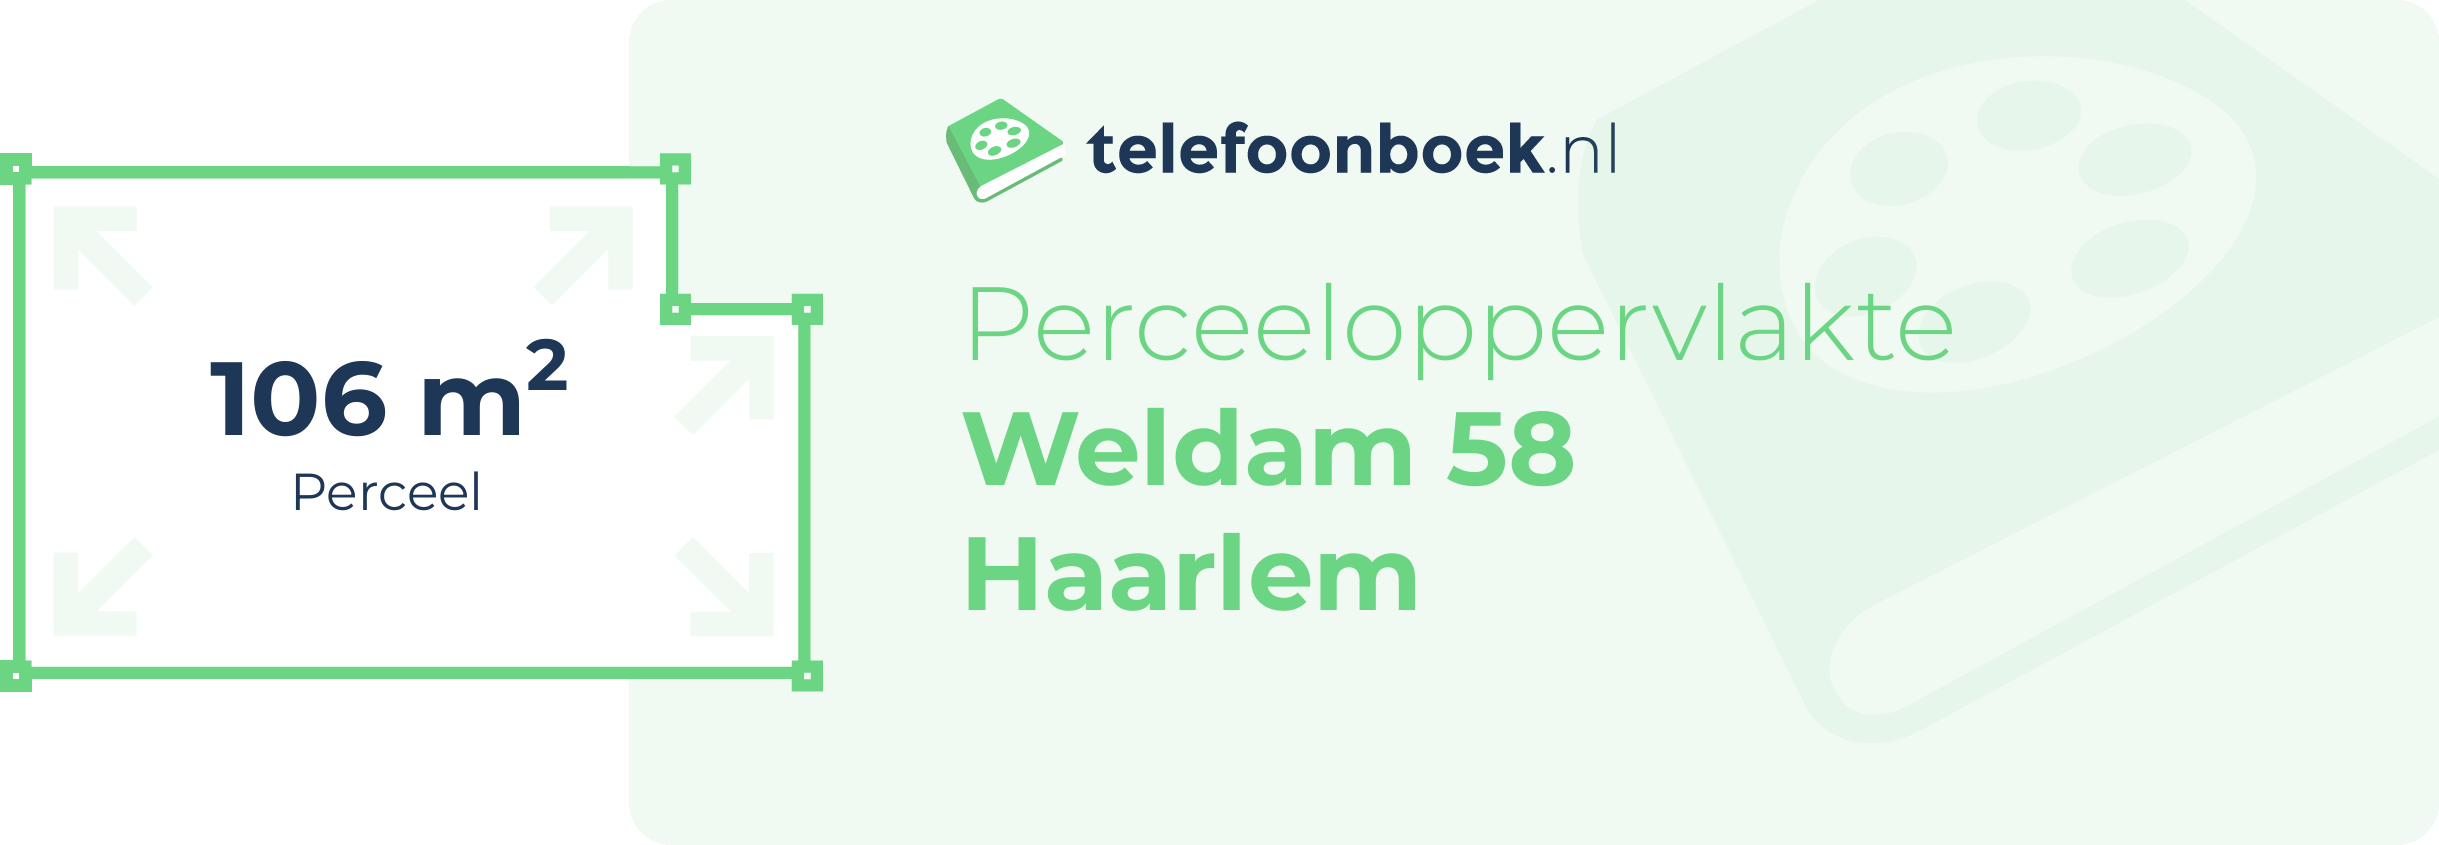 Perceeloppervlakte Weldam 58 Haarlem